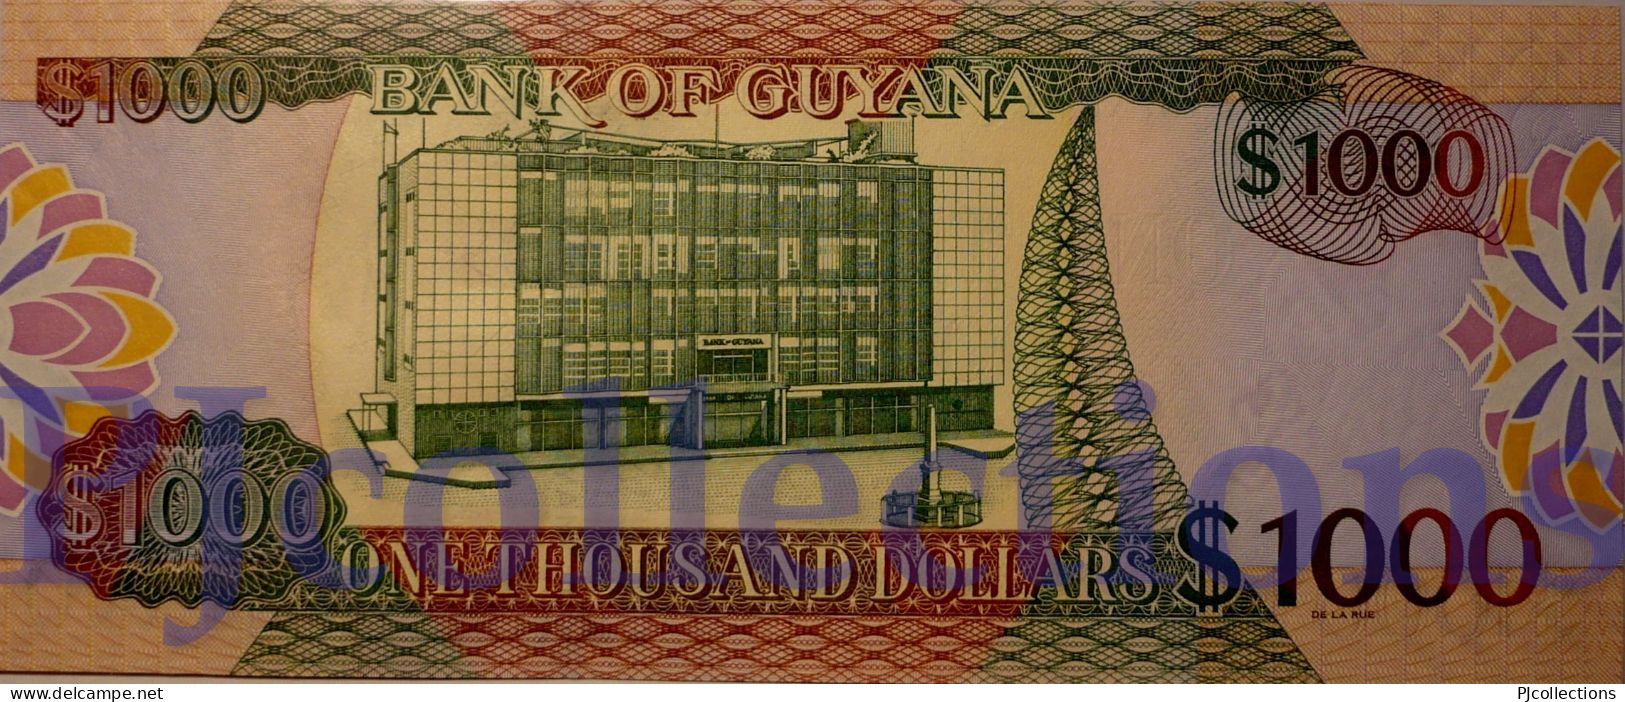 GUYANA 1000 DOLLARS 2011 PICK 38a UNC - Guyana